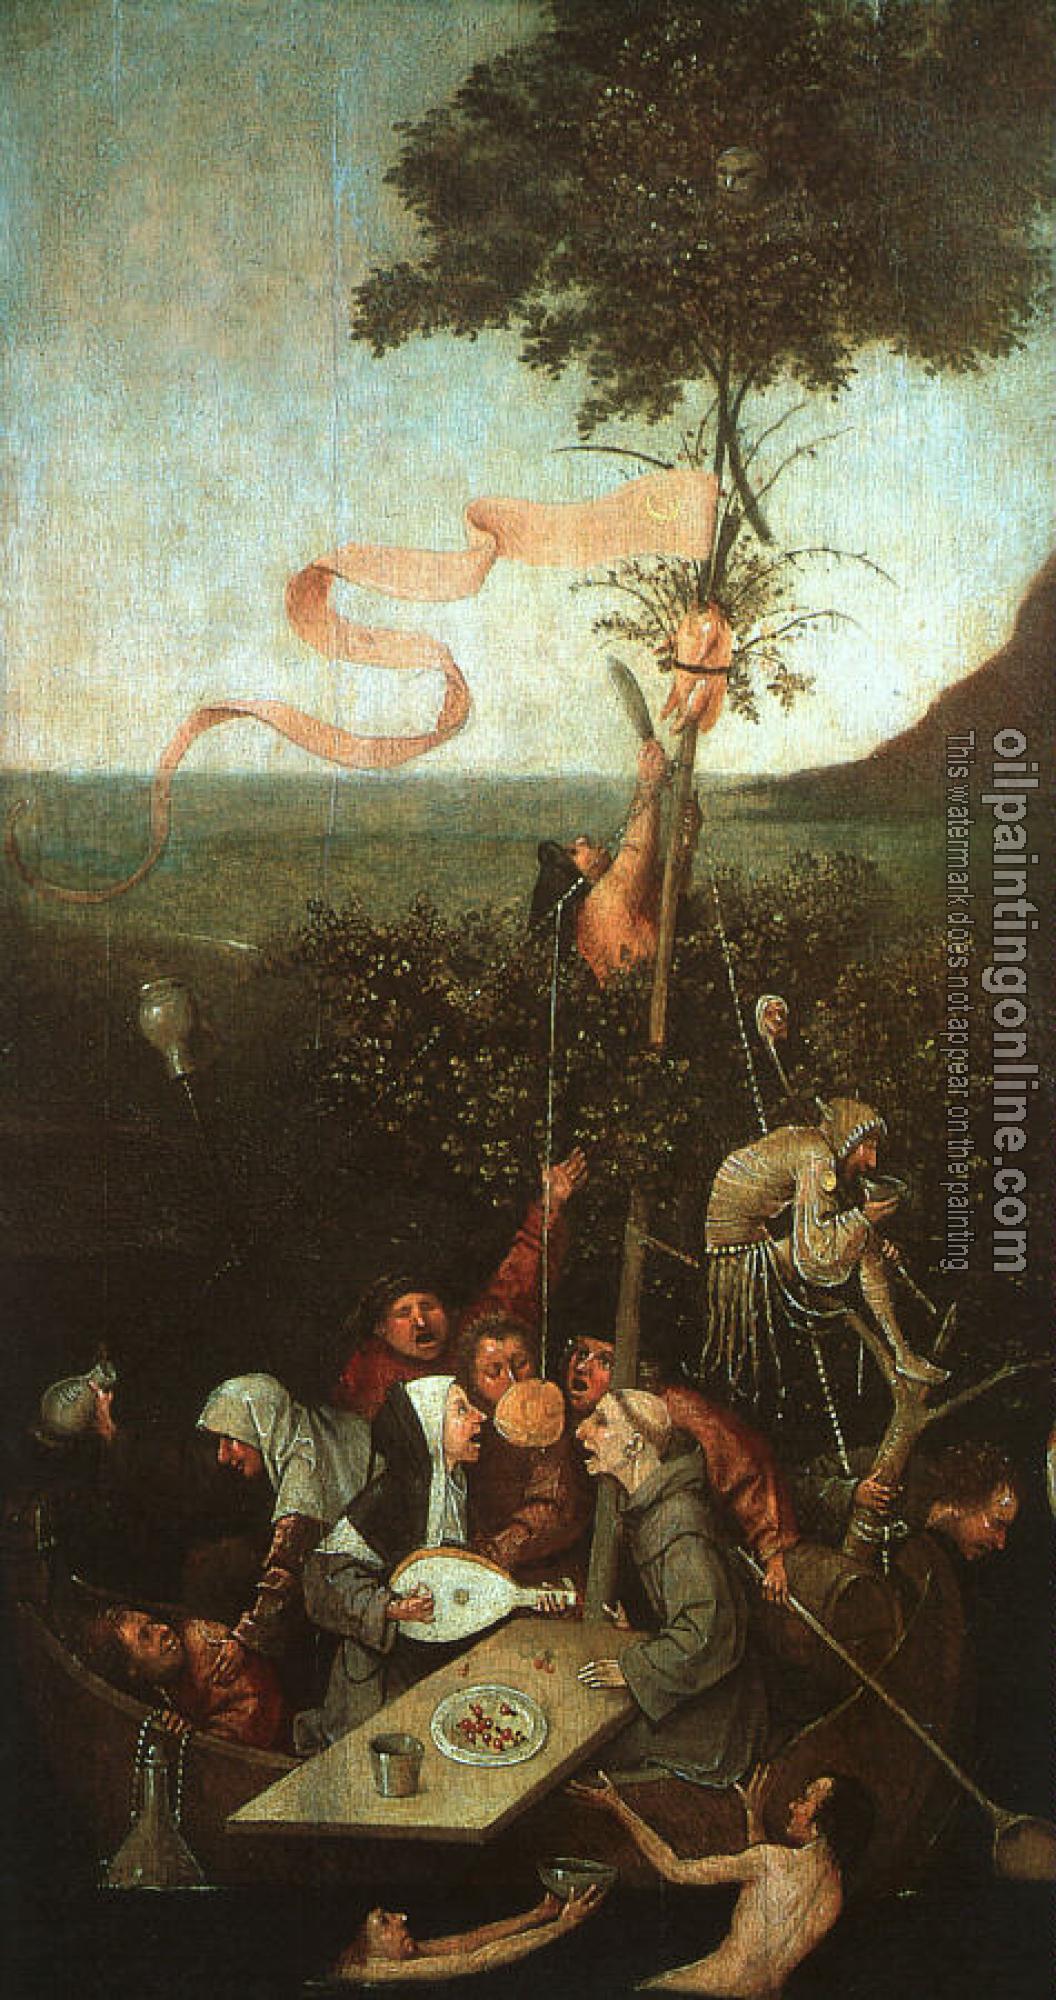 Bosch, Hieronymus - The Ship of Fools